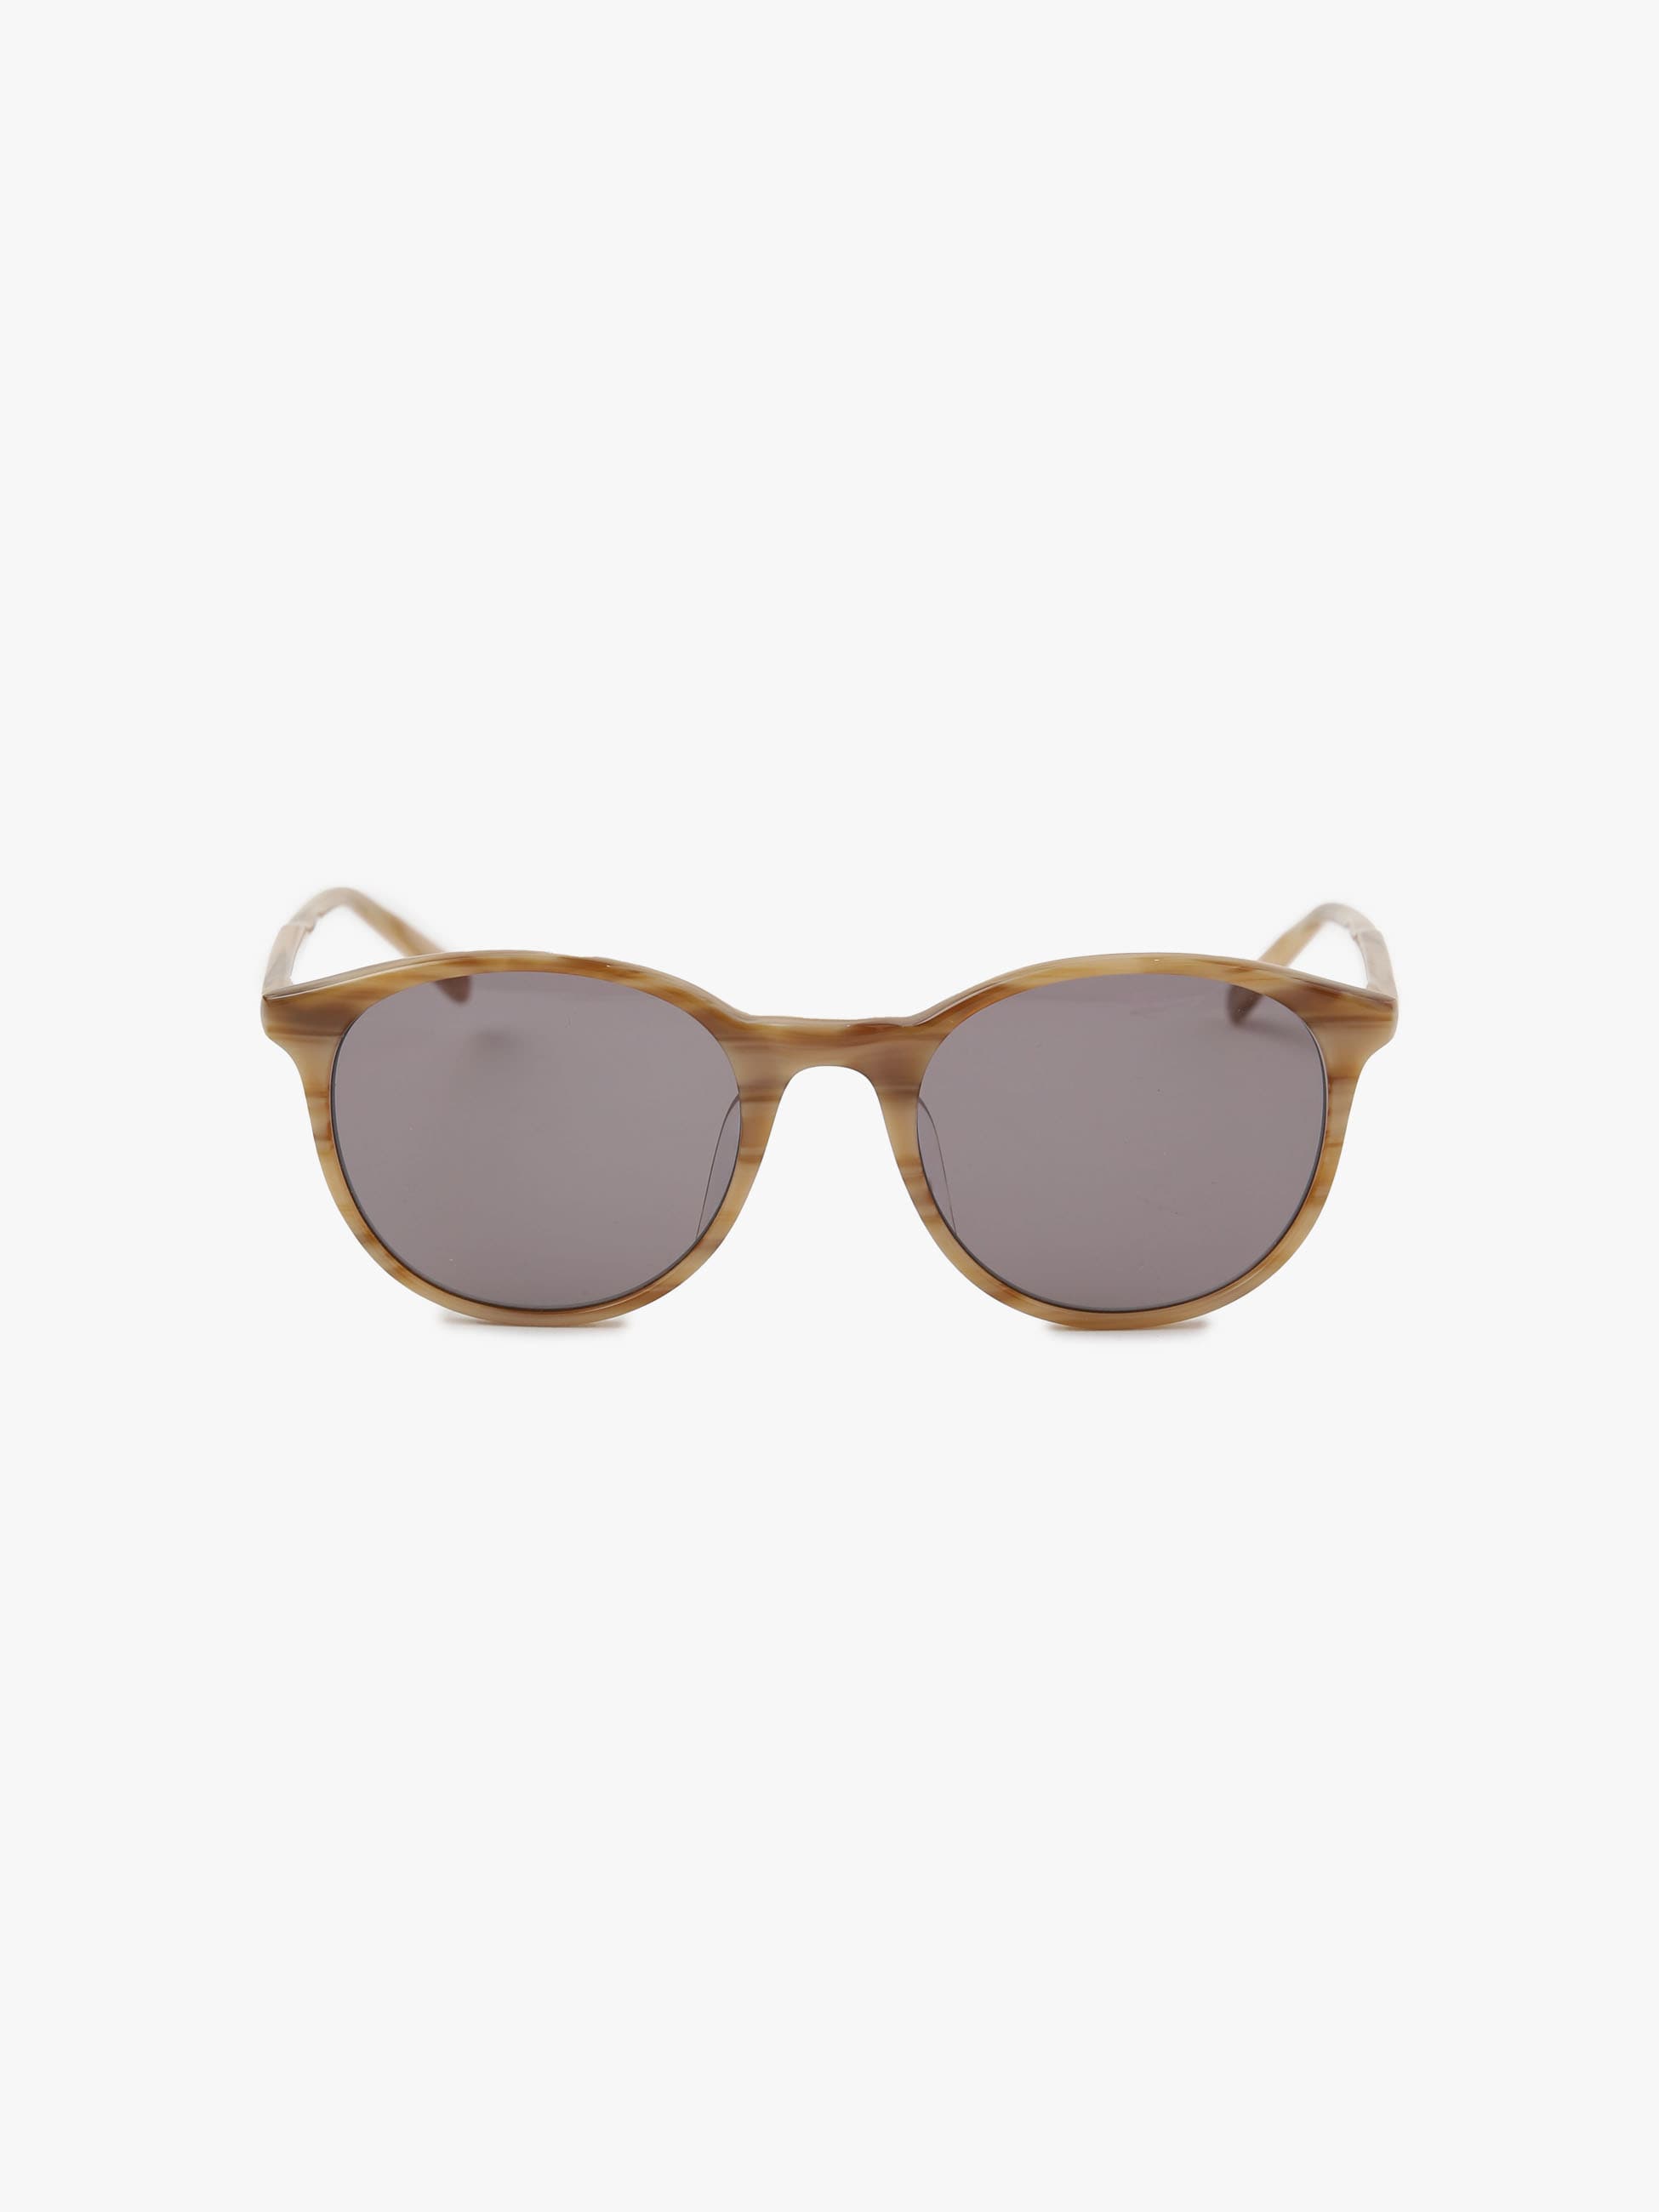 New Boston Sunglasses (Beige)｜Ron Herman(ロンハーマン)｜Ron Herman